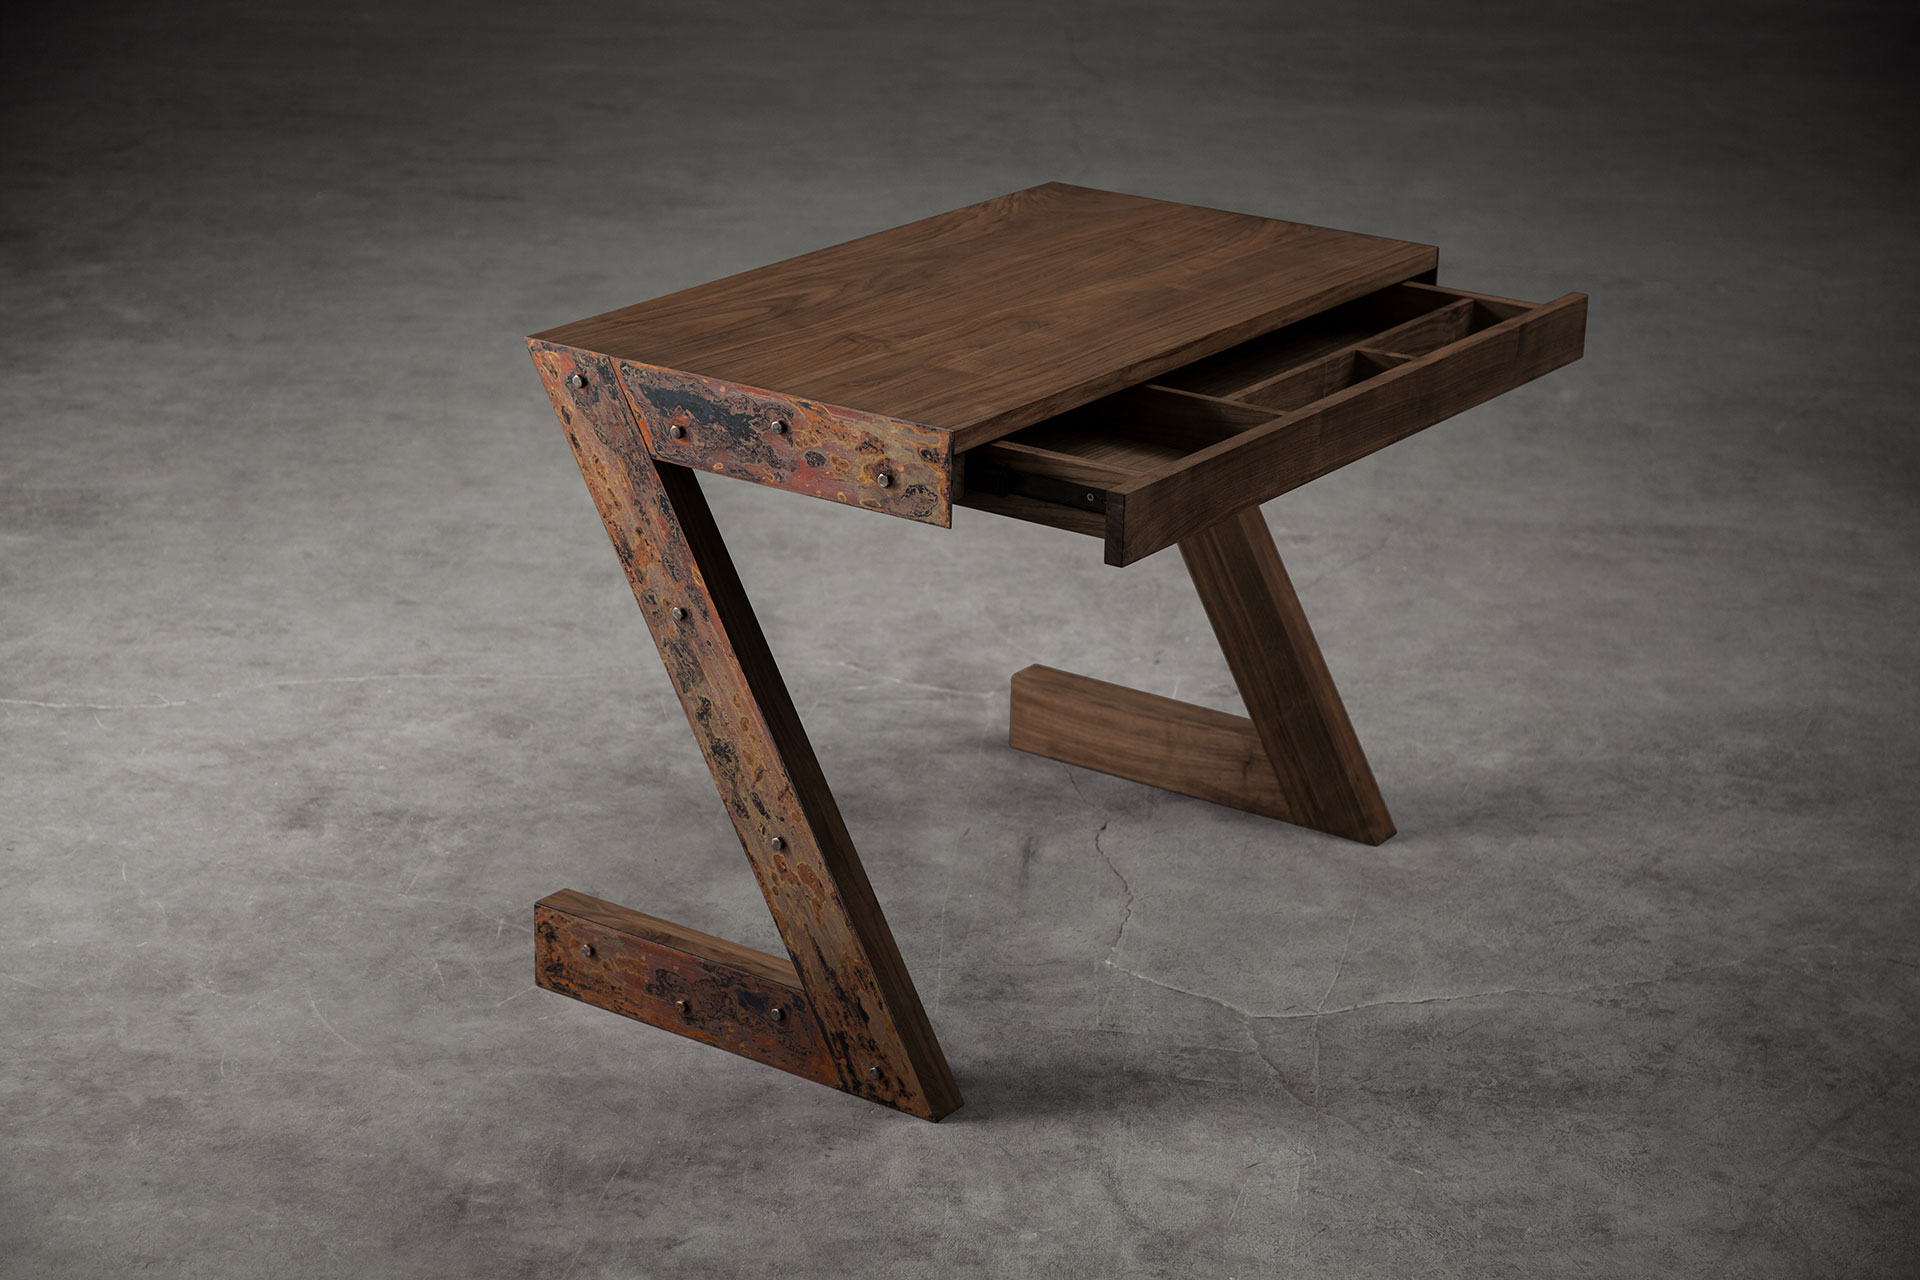 Designers walnut desk inspired by brutalism style